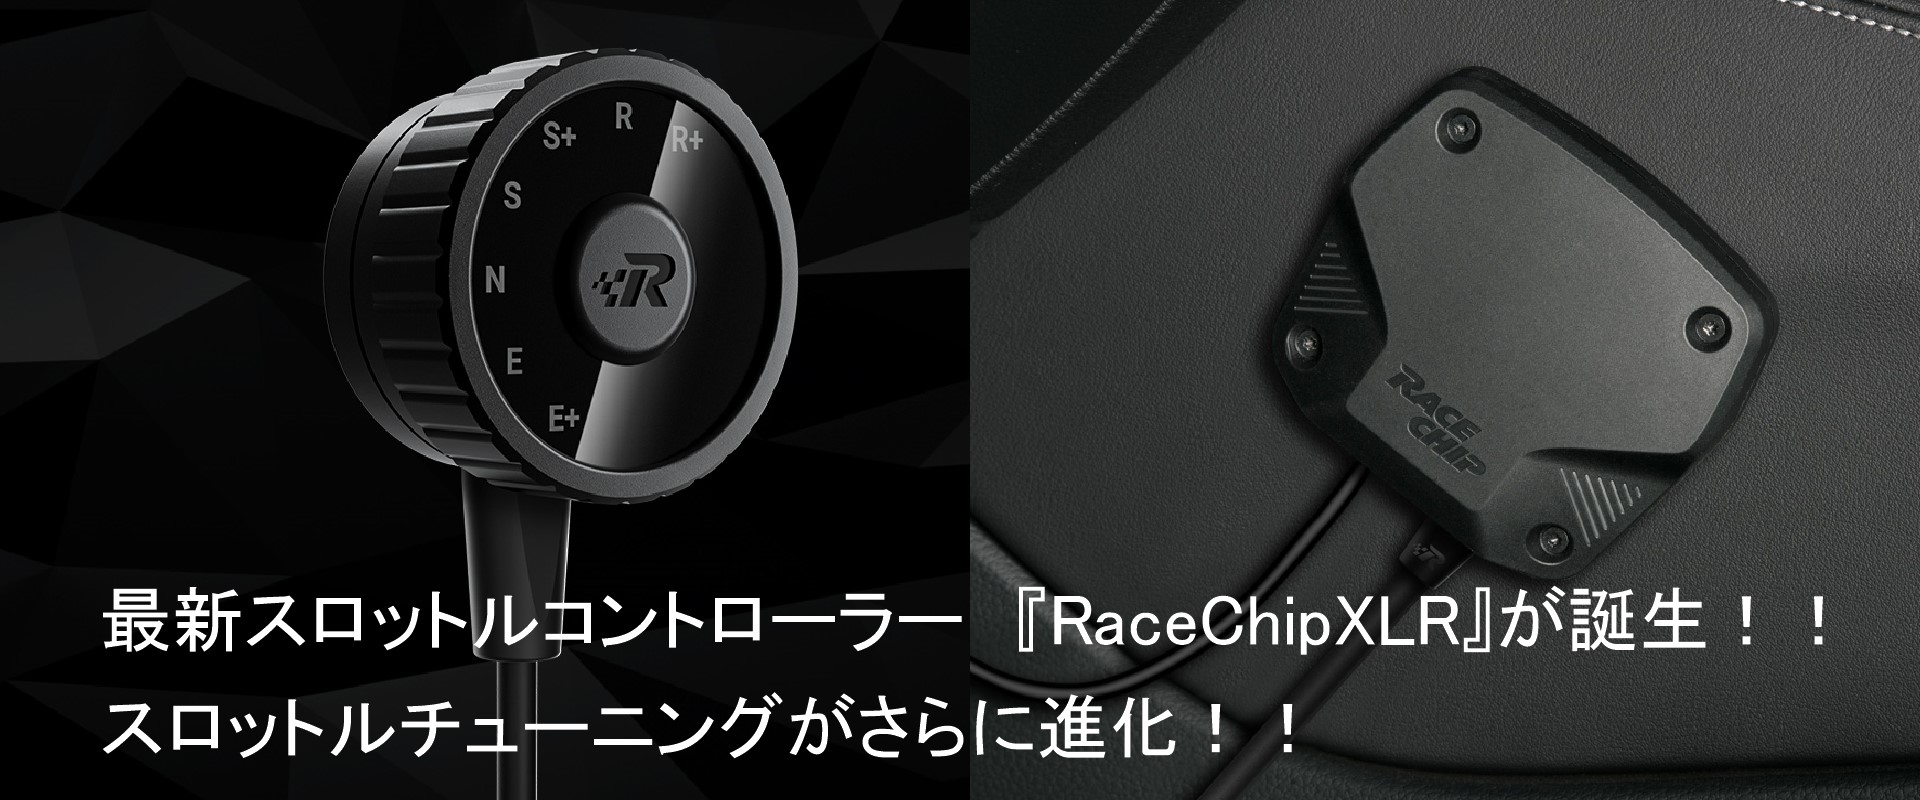 RaceChip Japan